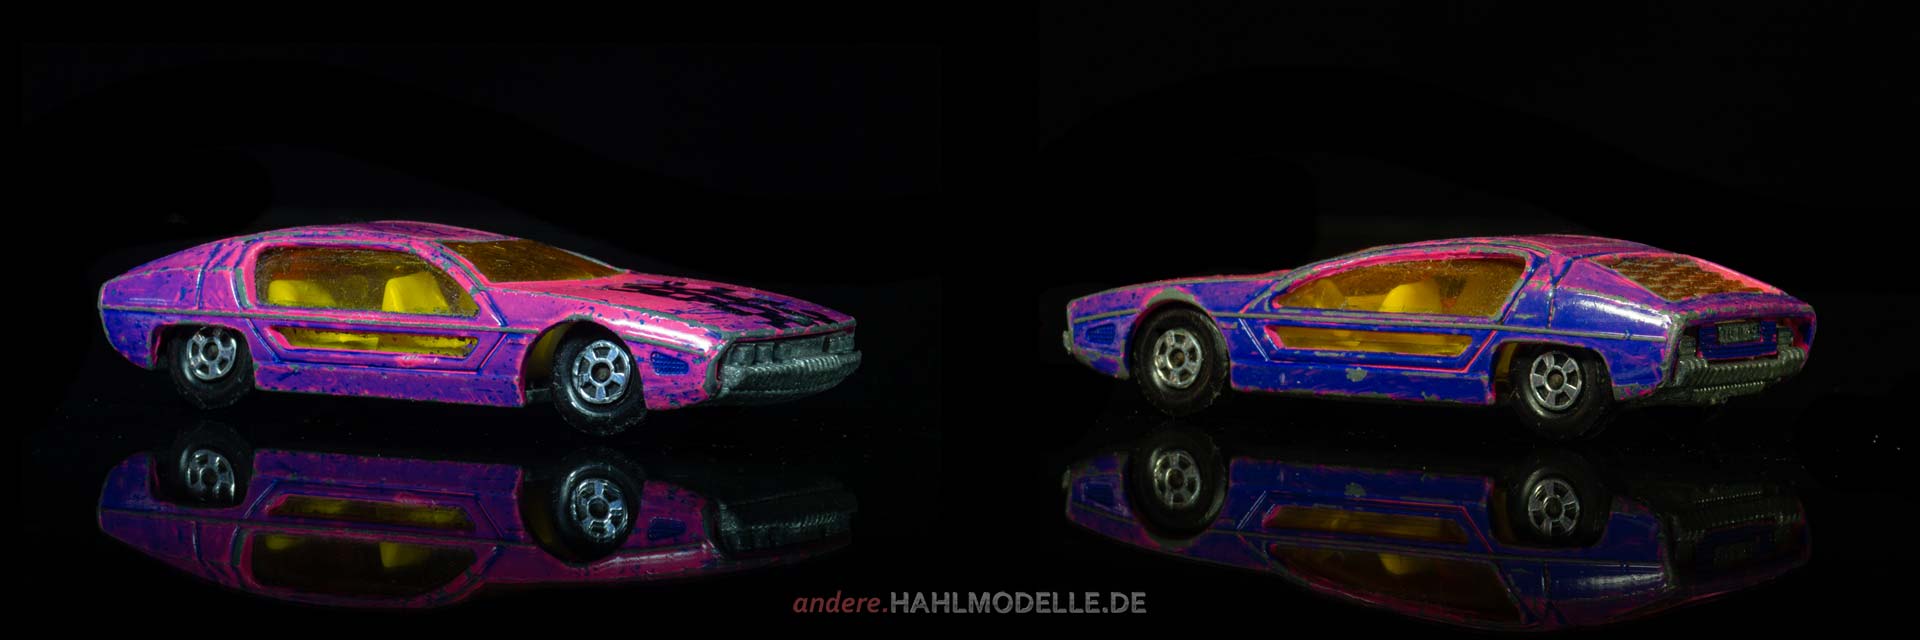 Lamborghini Marzal | Sportwagen | Lesney Products & Co. Ltd. | 1:58 | Matchbox Superfast | www.andere.hahlmodelle.de